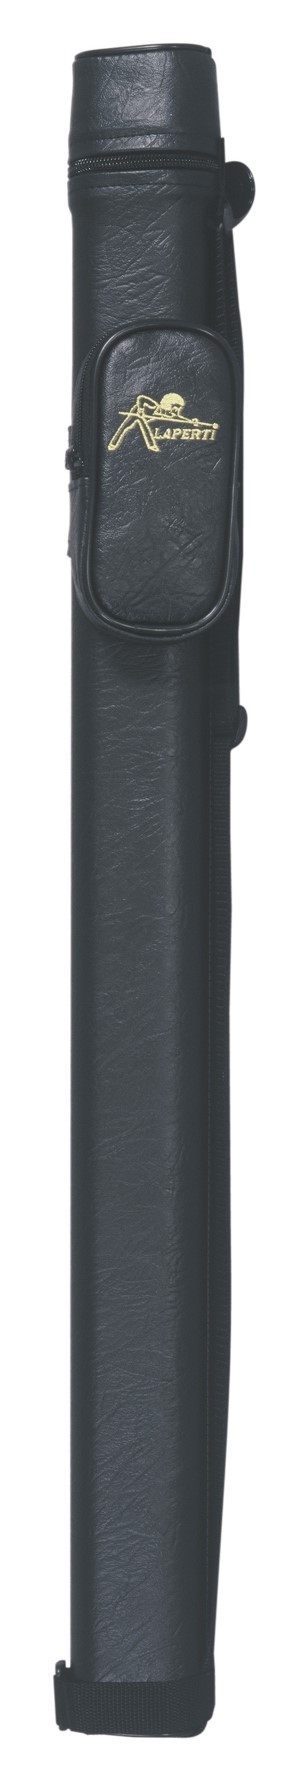 Étui à queue de billard en cuir PU - Portable pour tube de queue de billard  - Noir